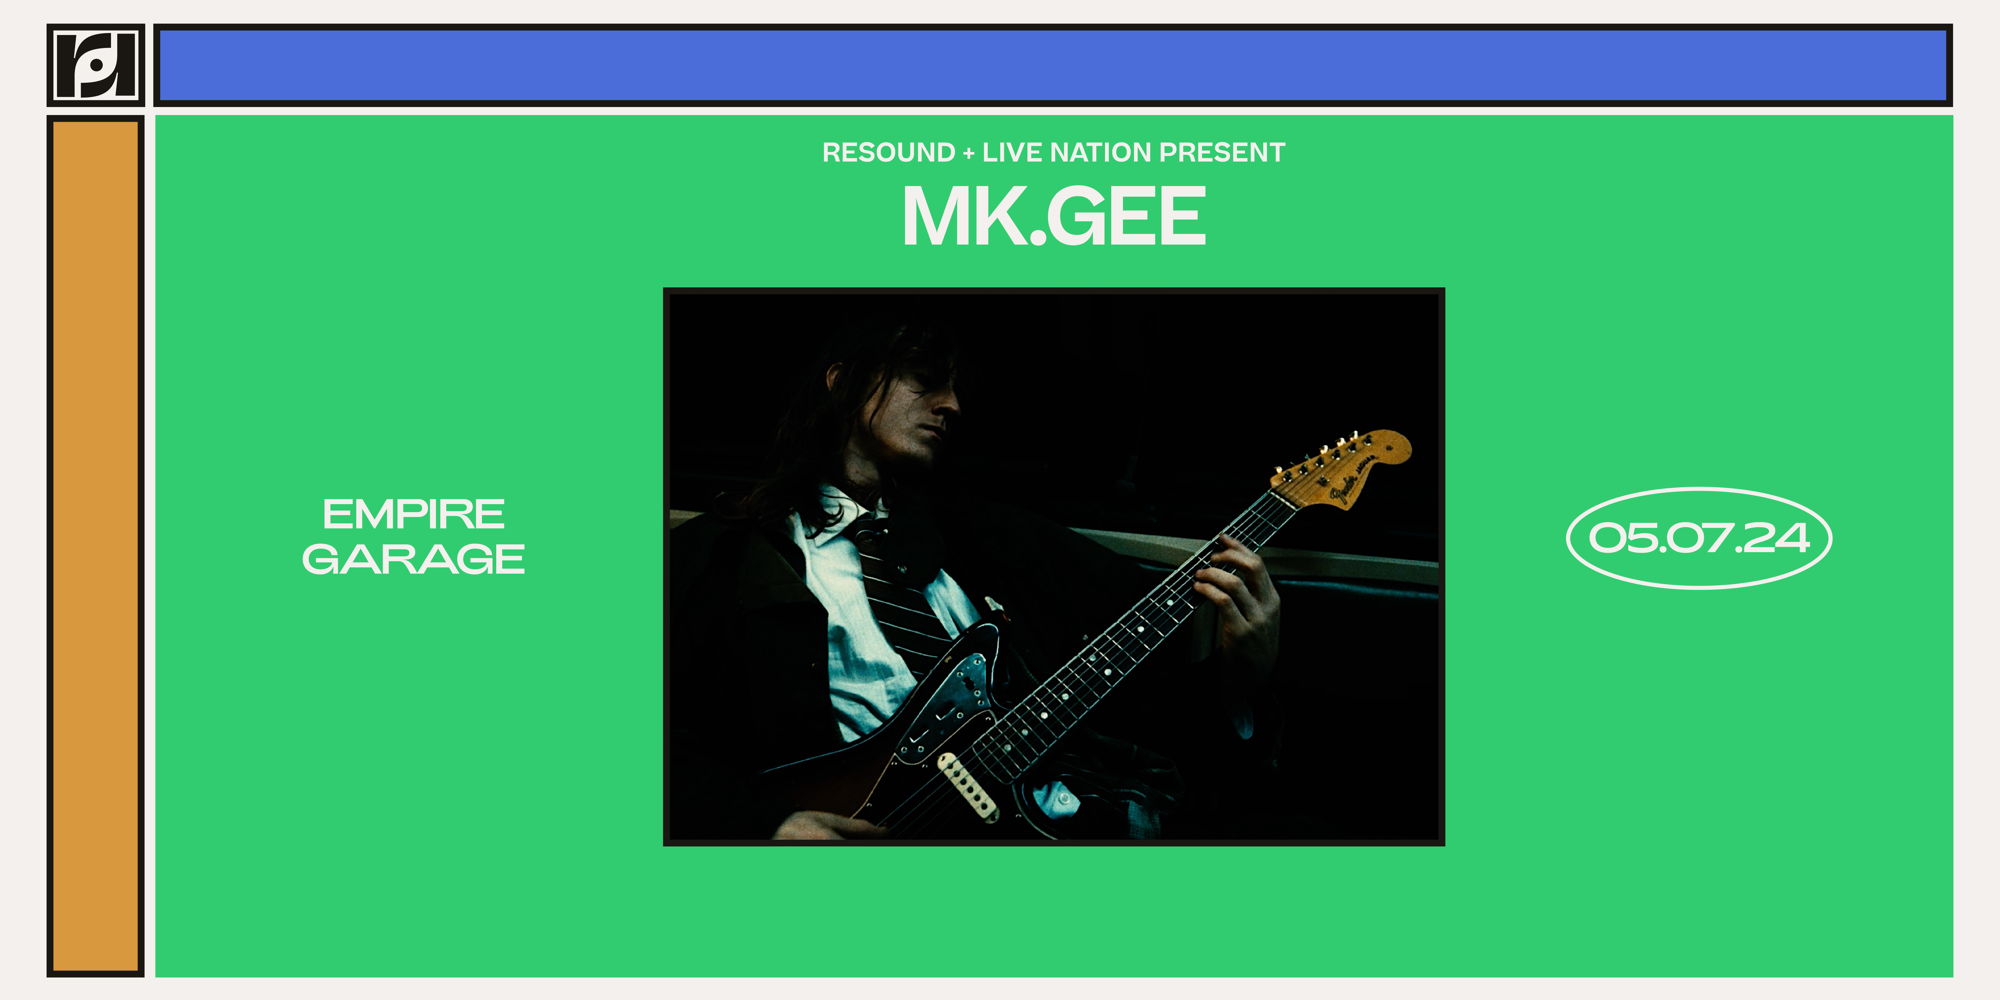 Live Nation & Resound Present: Mk.gee at Empire Garage promotional image